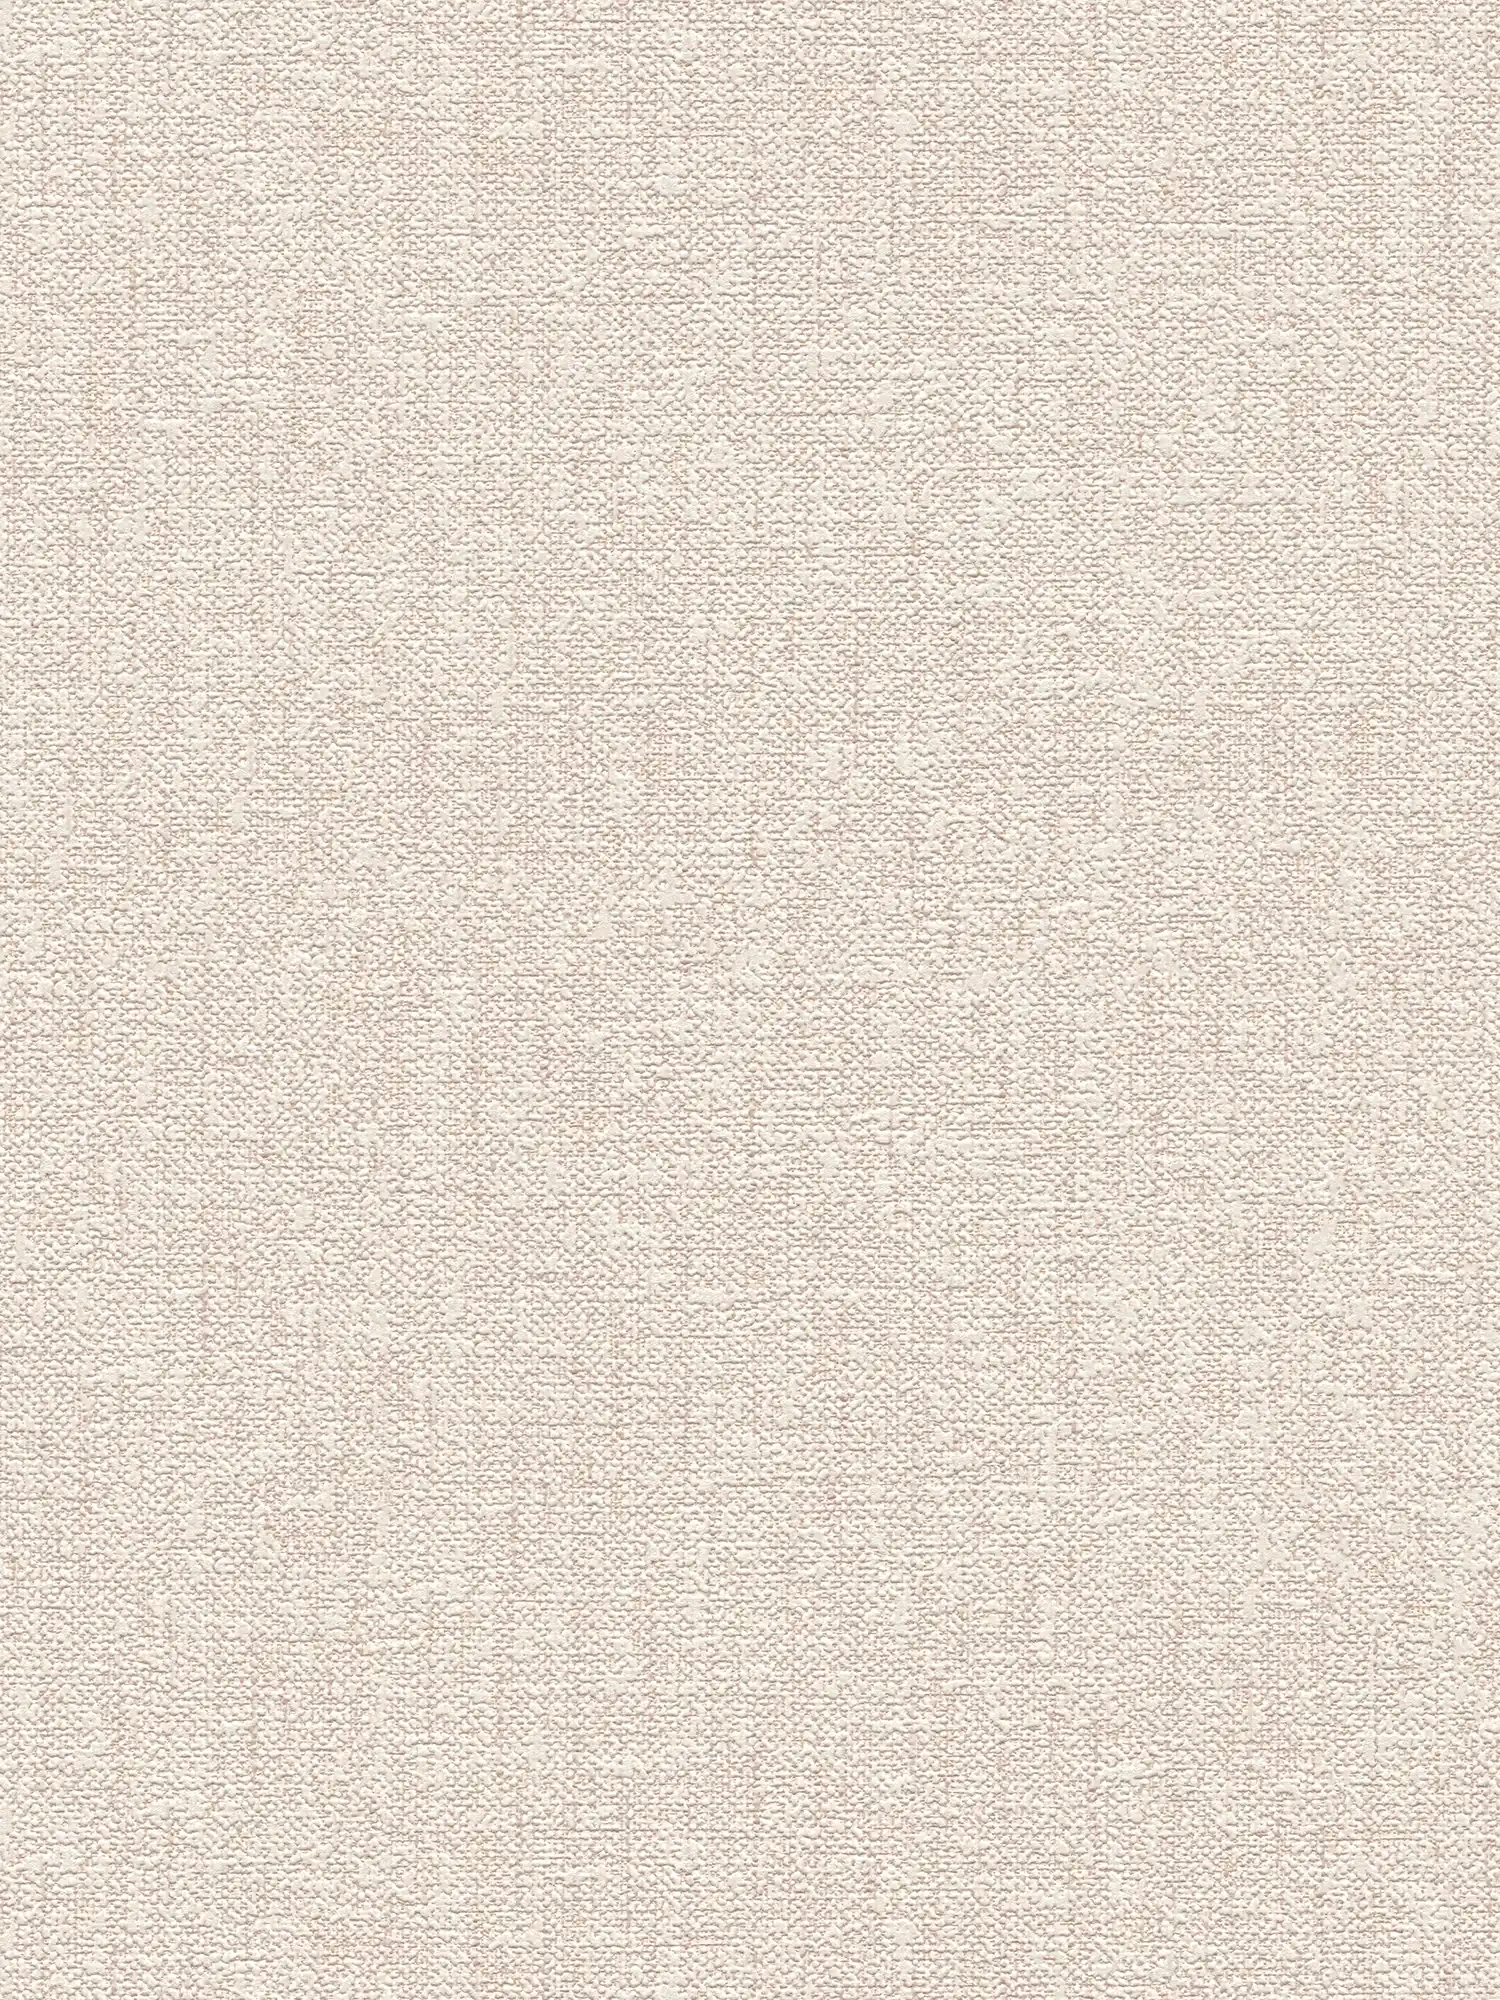 Papiertapete mit Textilstruktur in Leinenoptik – Braun
